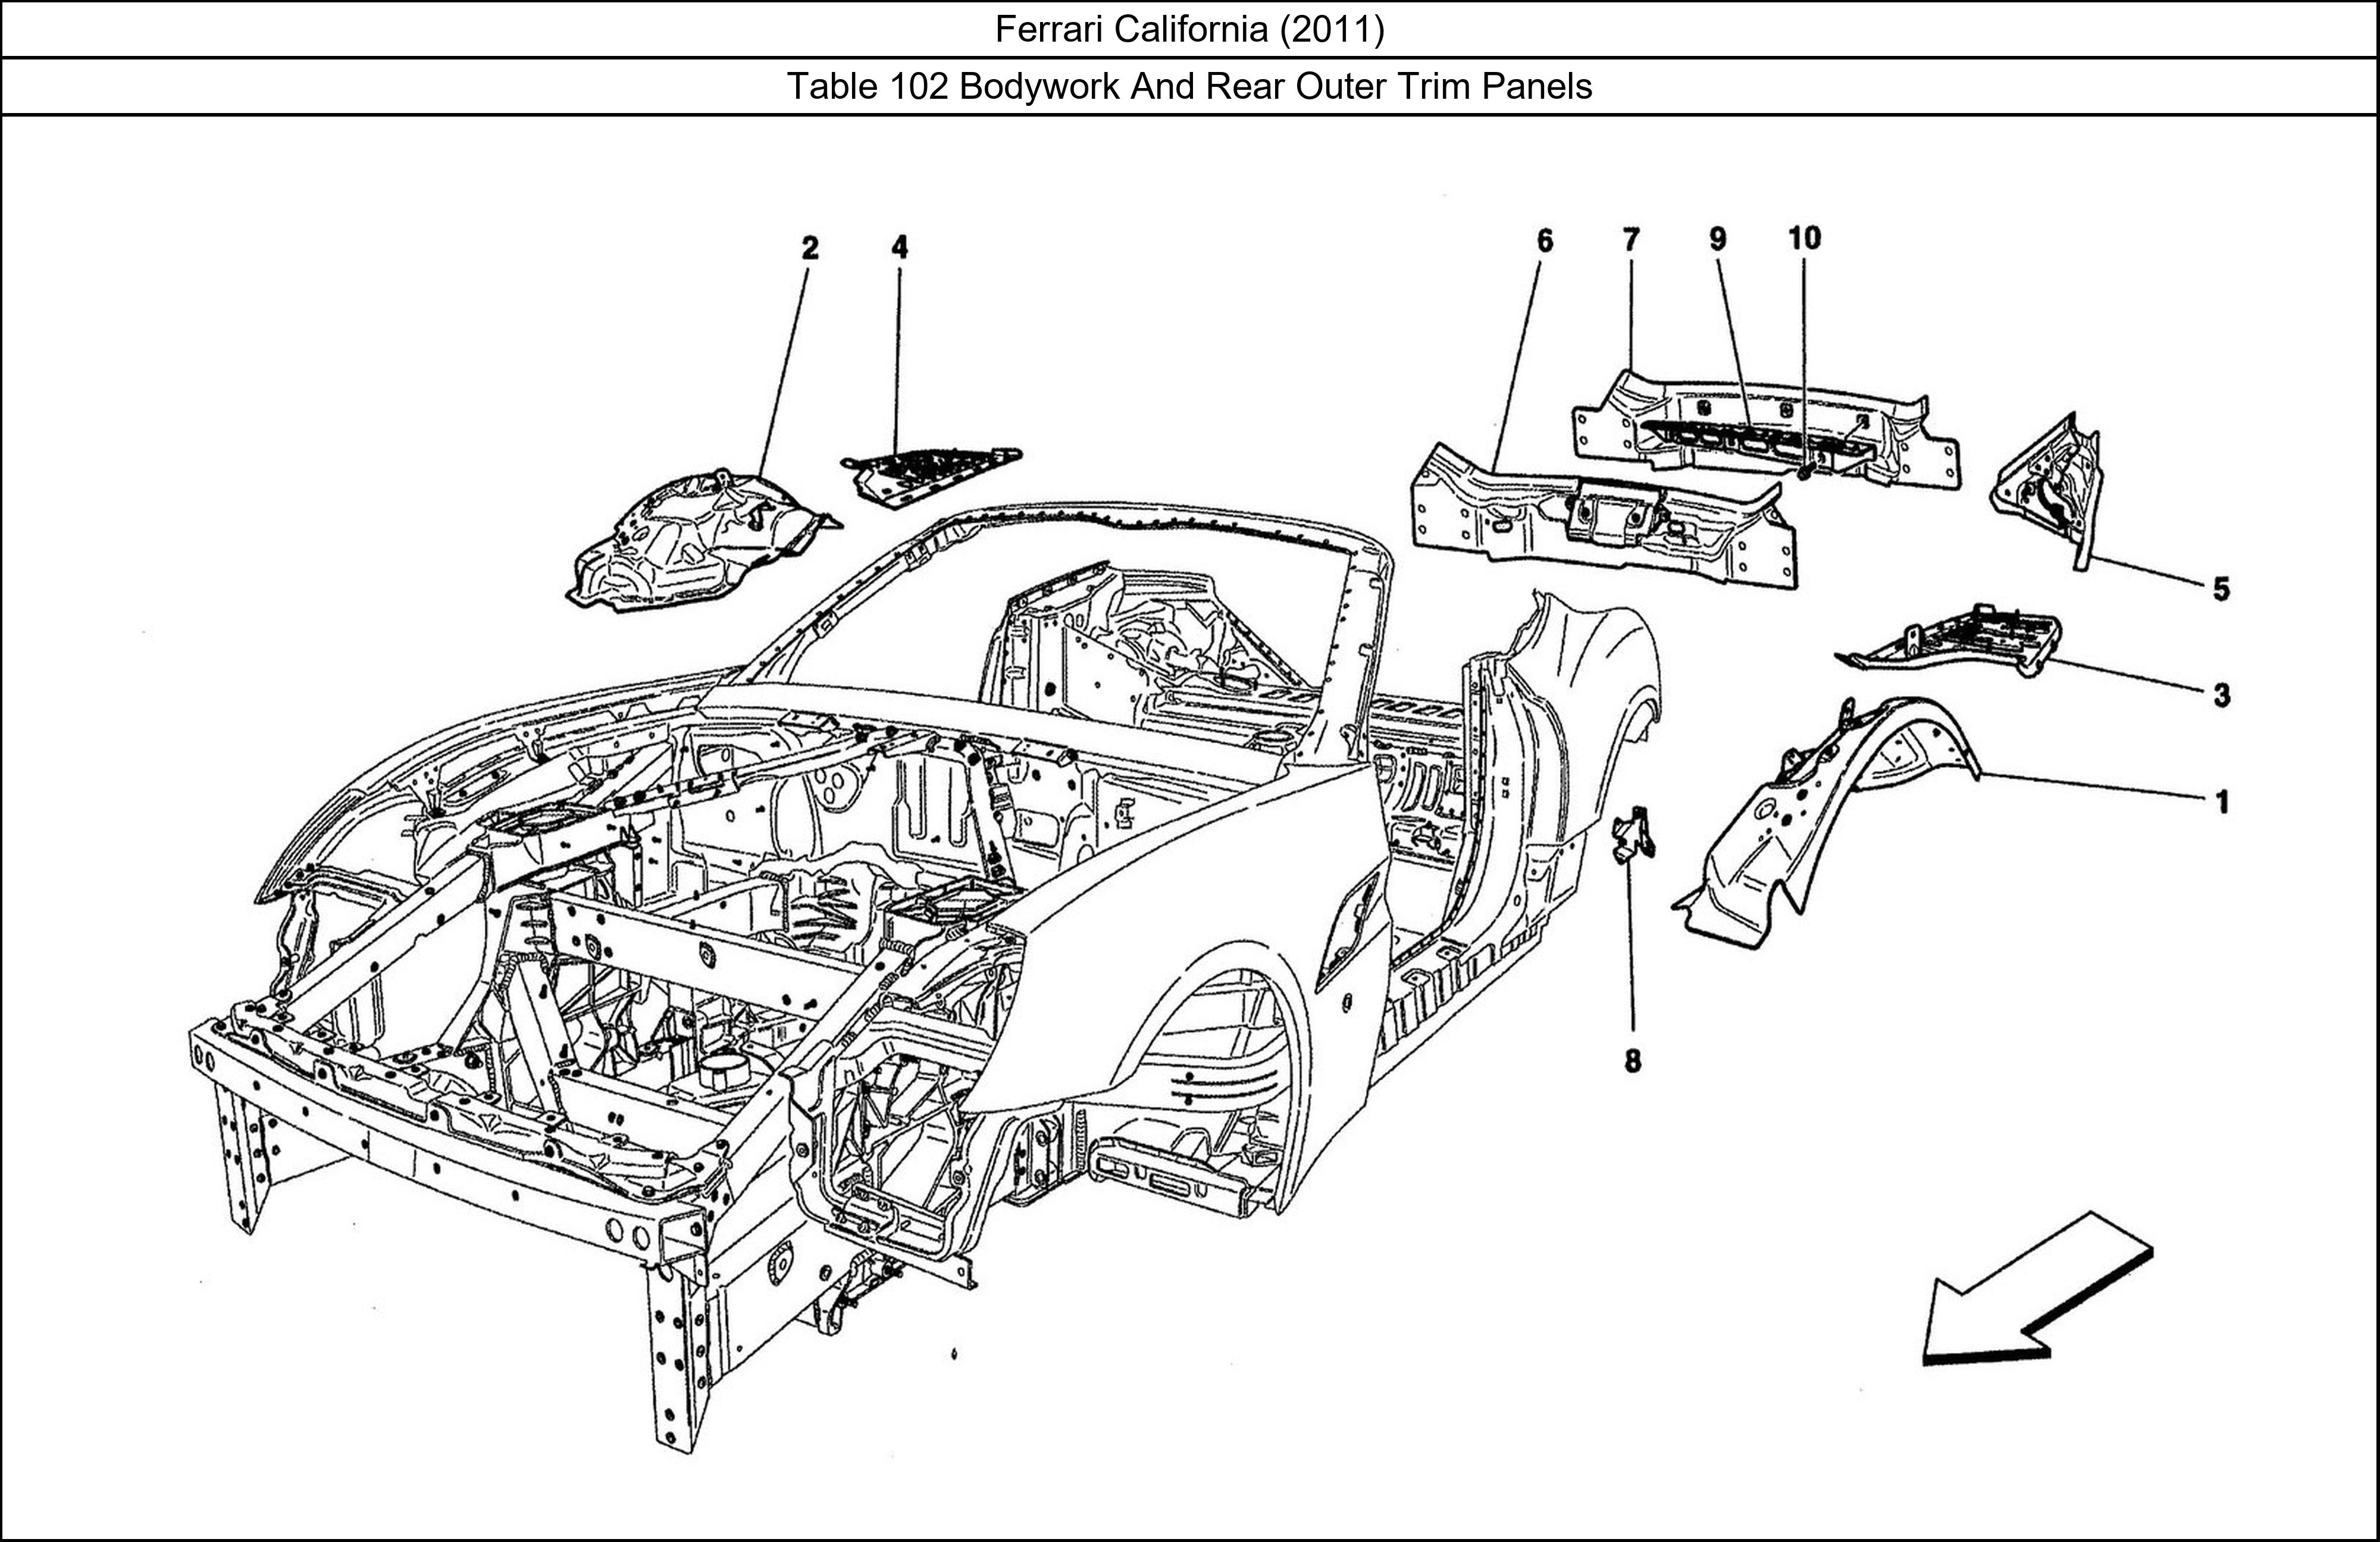 Ferrari Parts Ferrari California (2011) Table 102 Bodywork And Rear Outer Trim Panels